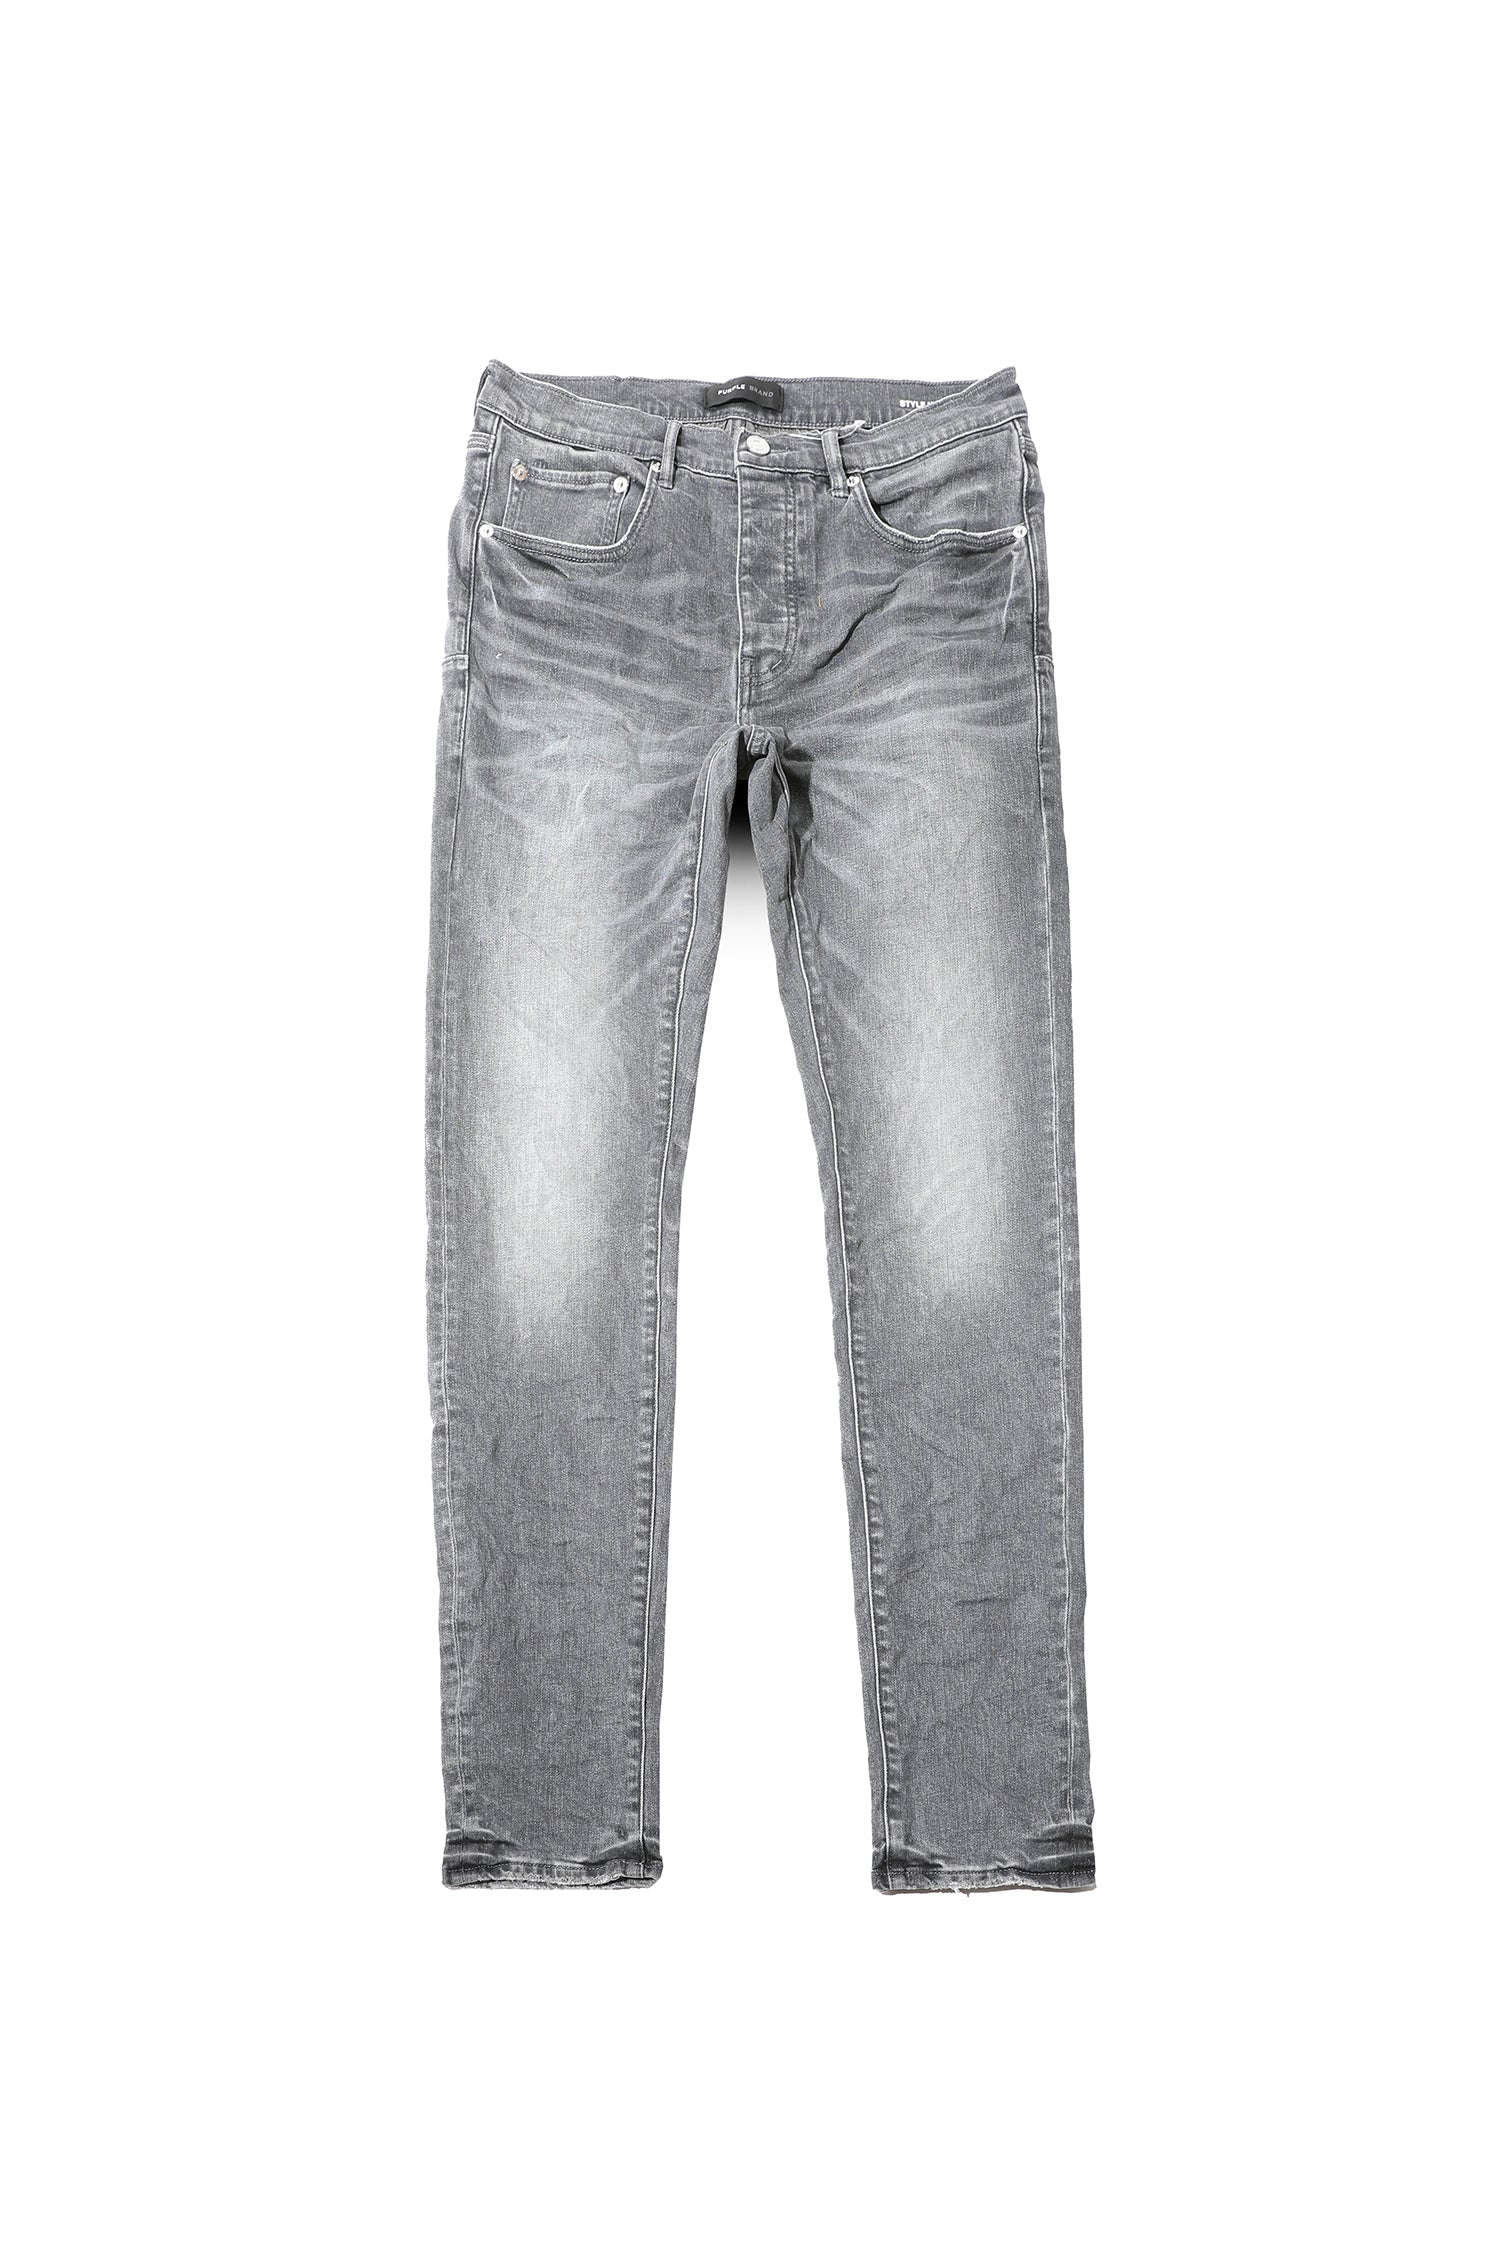 Purple Brand Vintage Slate Jeans - GREY - Civilized Nation